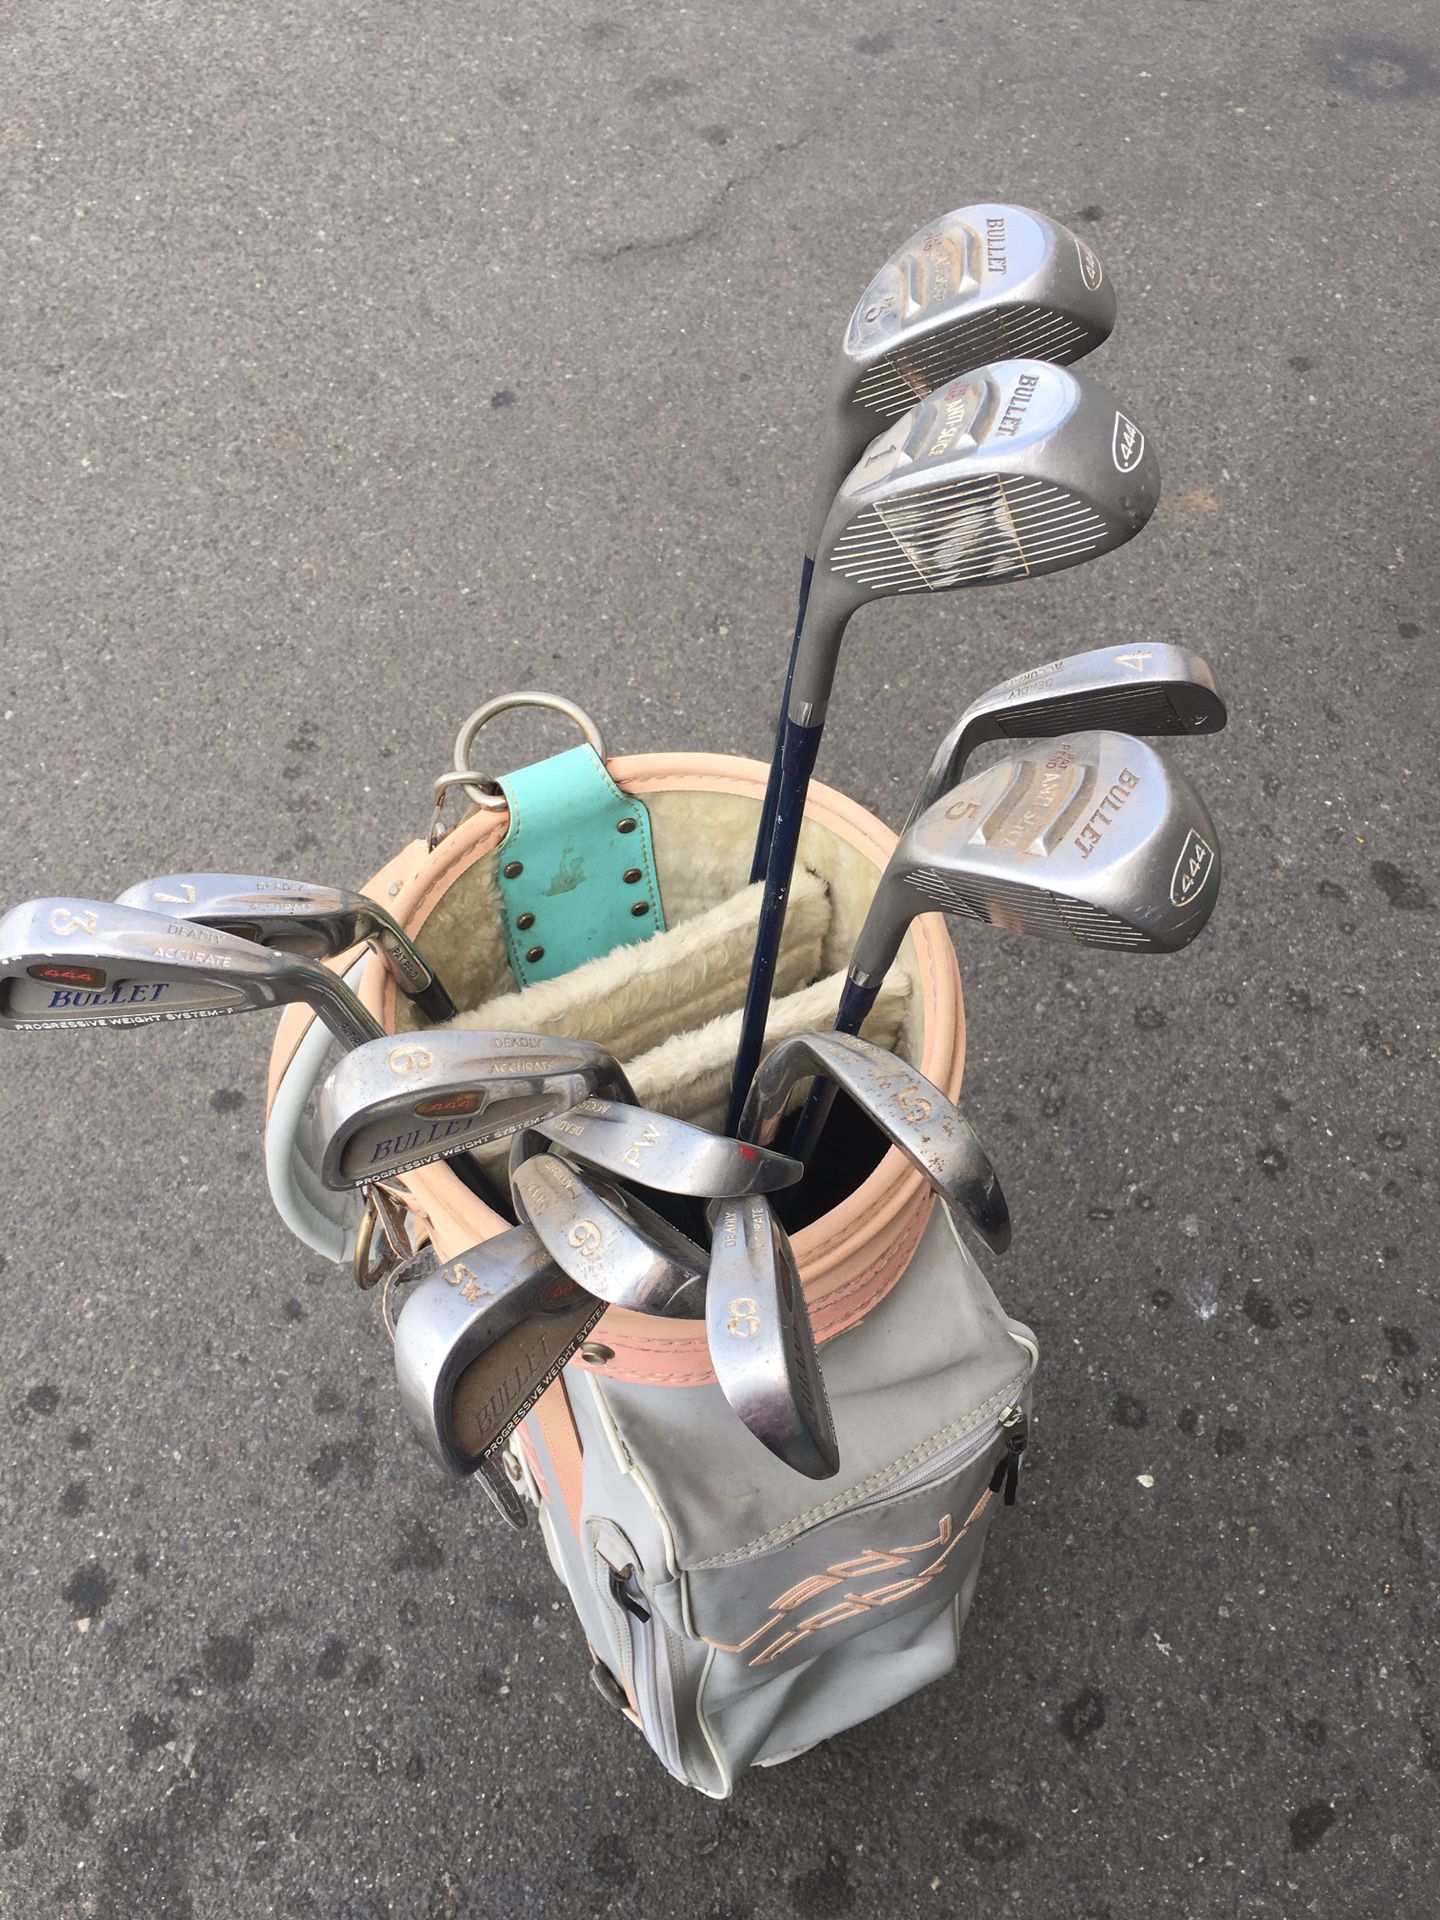 Ladies Bullit 444 Anti Slice RH Golf Clubs Good condition. Includes: 3,4,5,6,7,8,9,SW,PW irons. 1,3,5,Woods, Cobra Bag, Graphite Shafts.